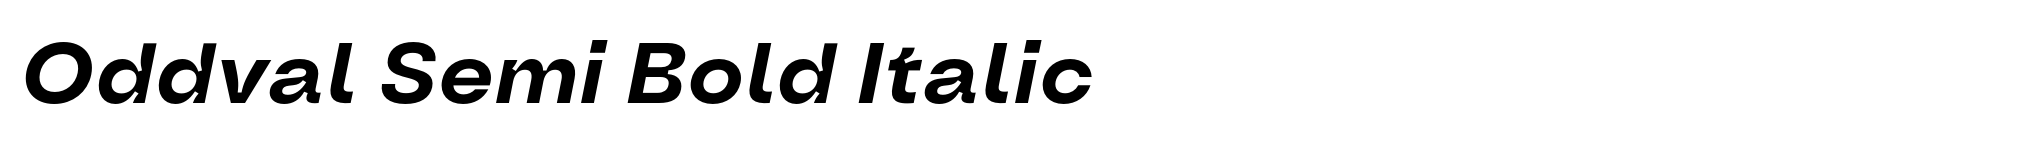 Oddval Semi Bold Italic image